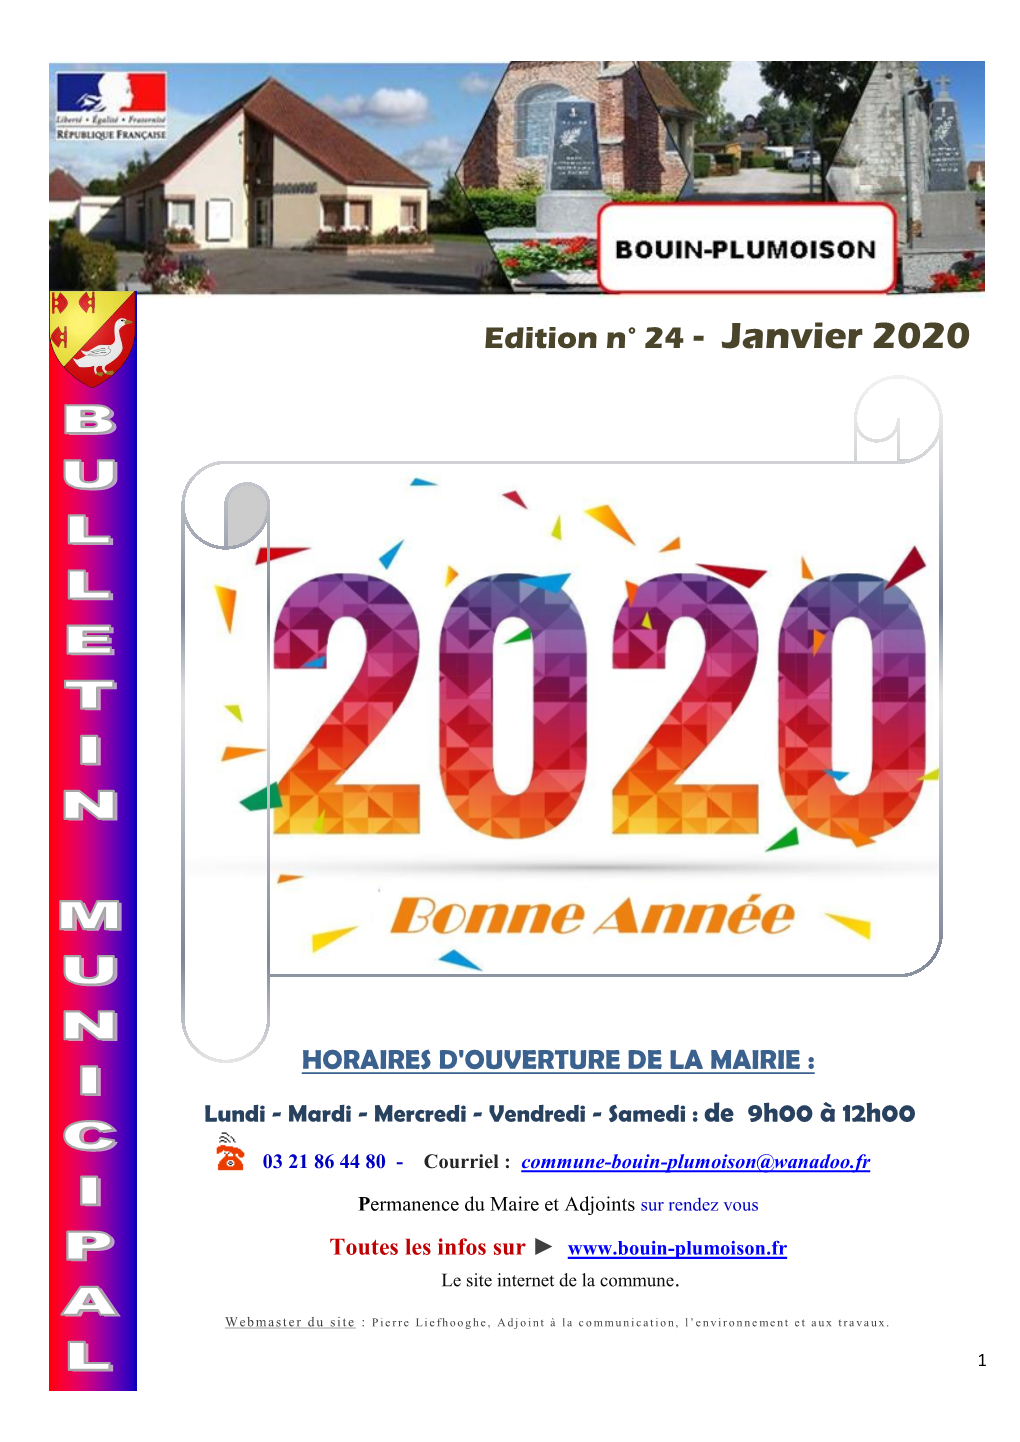 Edition N° 24 - Janvier 2020